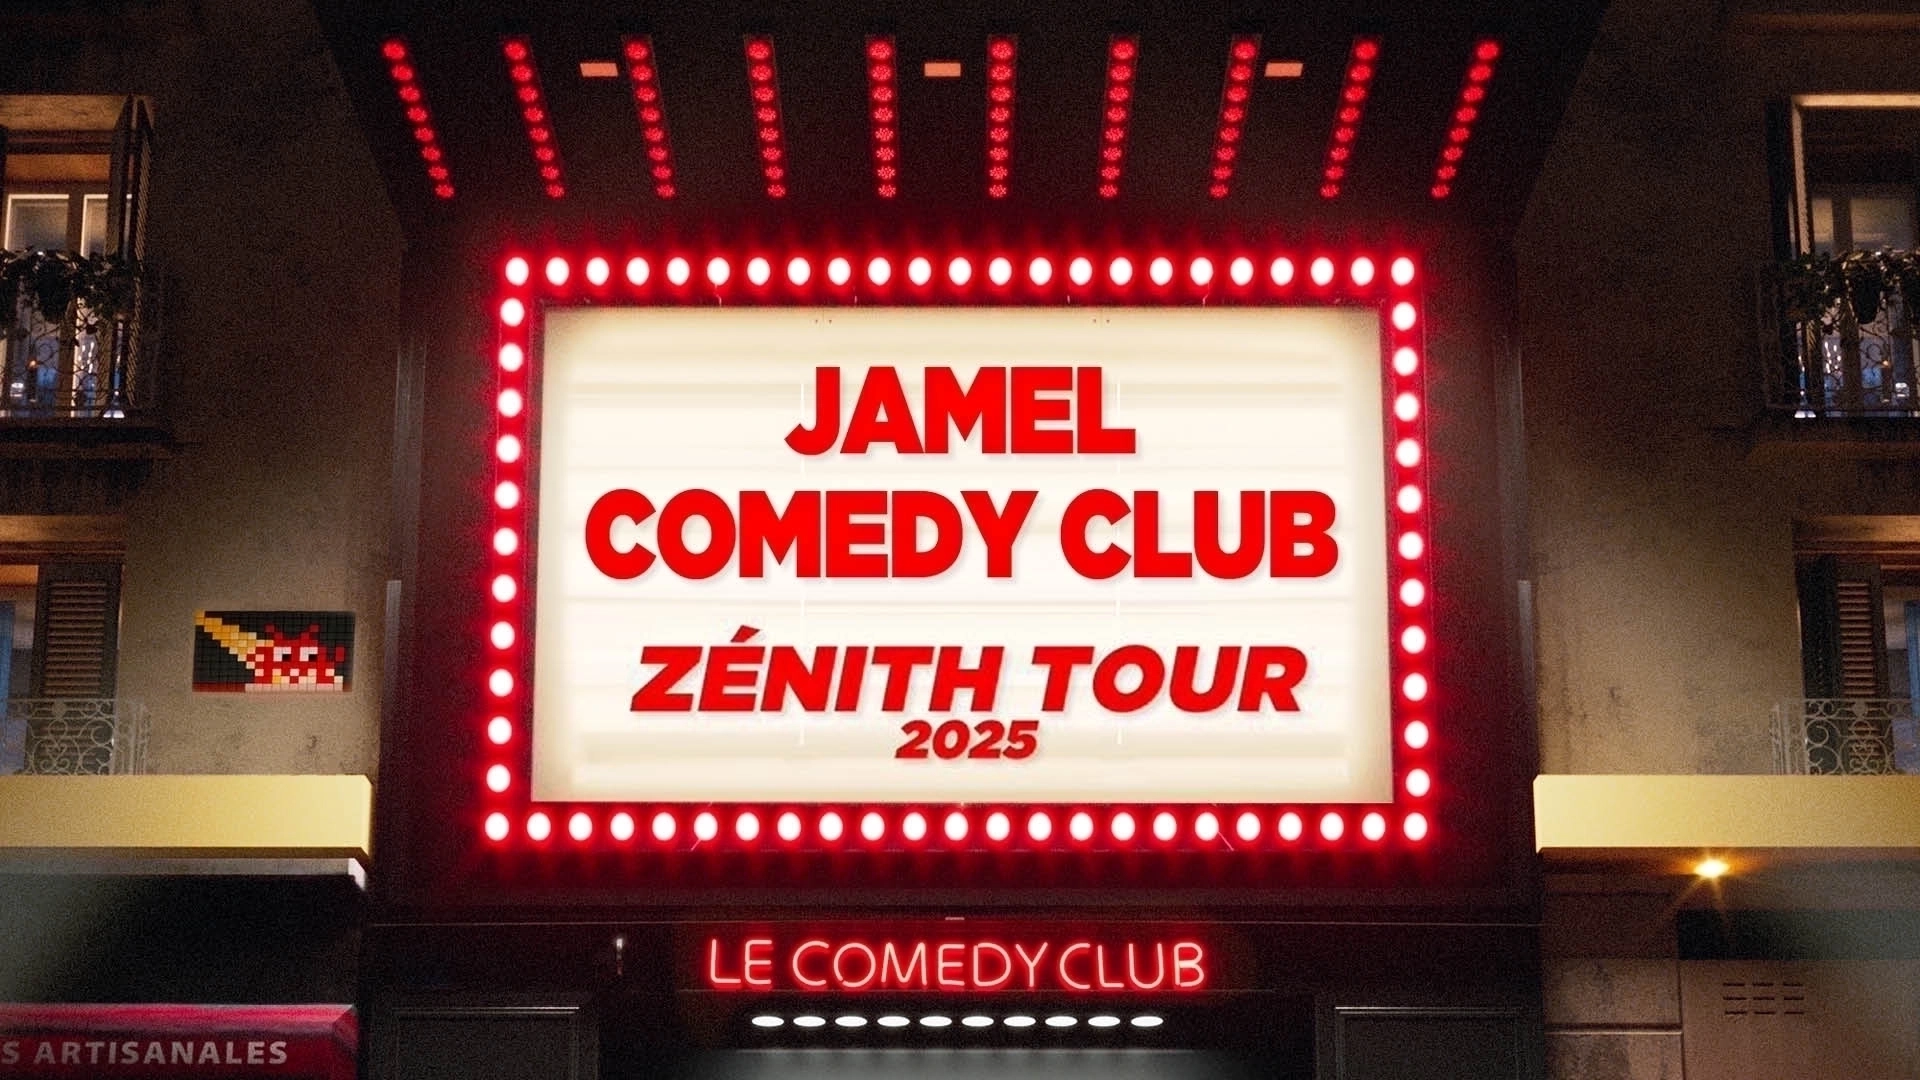 Jamel Comedy Club Zenith Tour 2025 at Zenith Lille Tickets